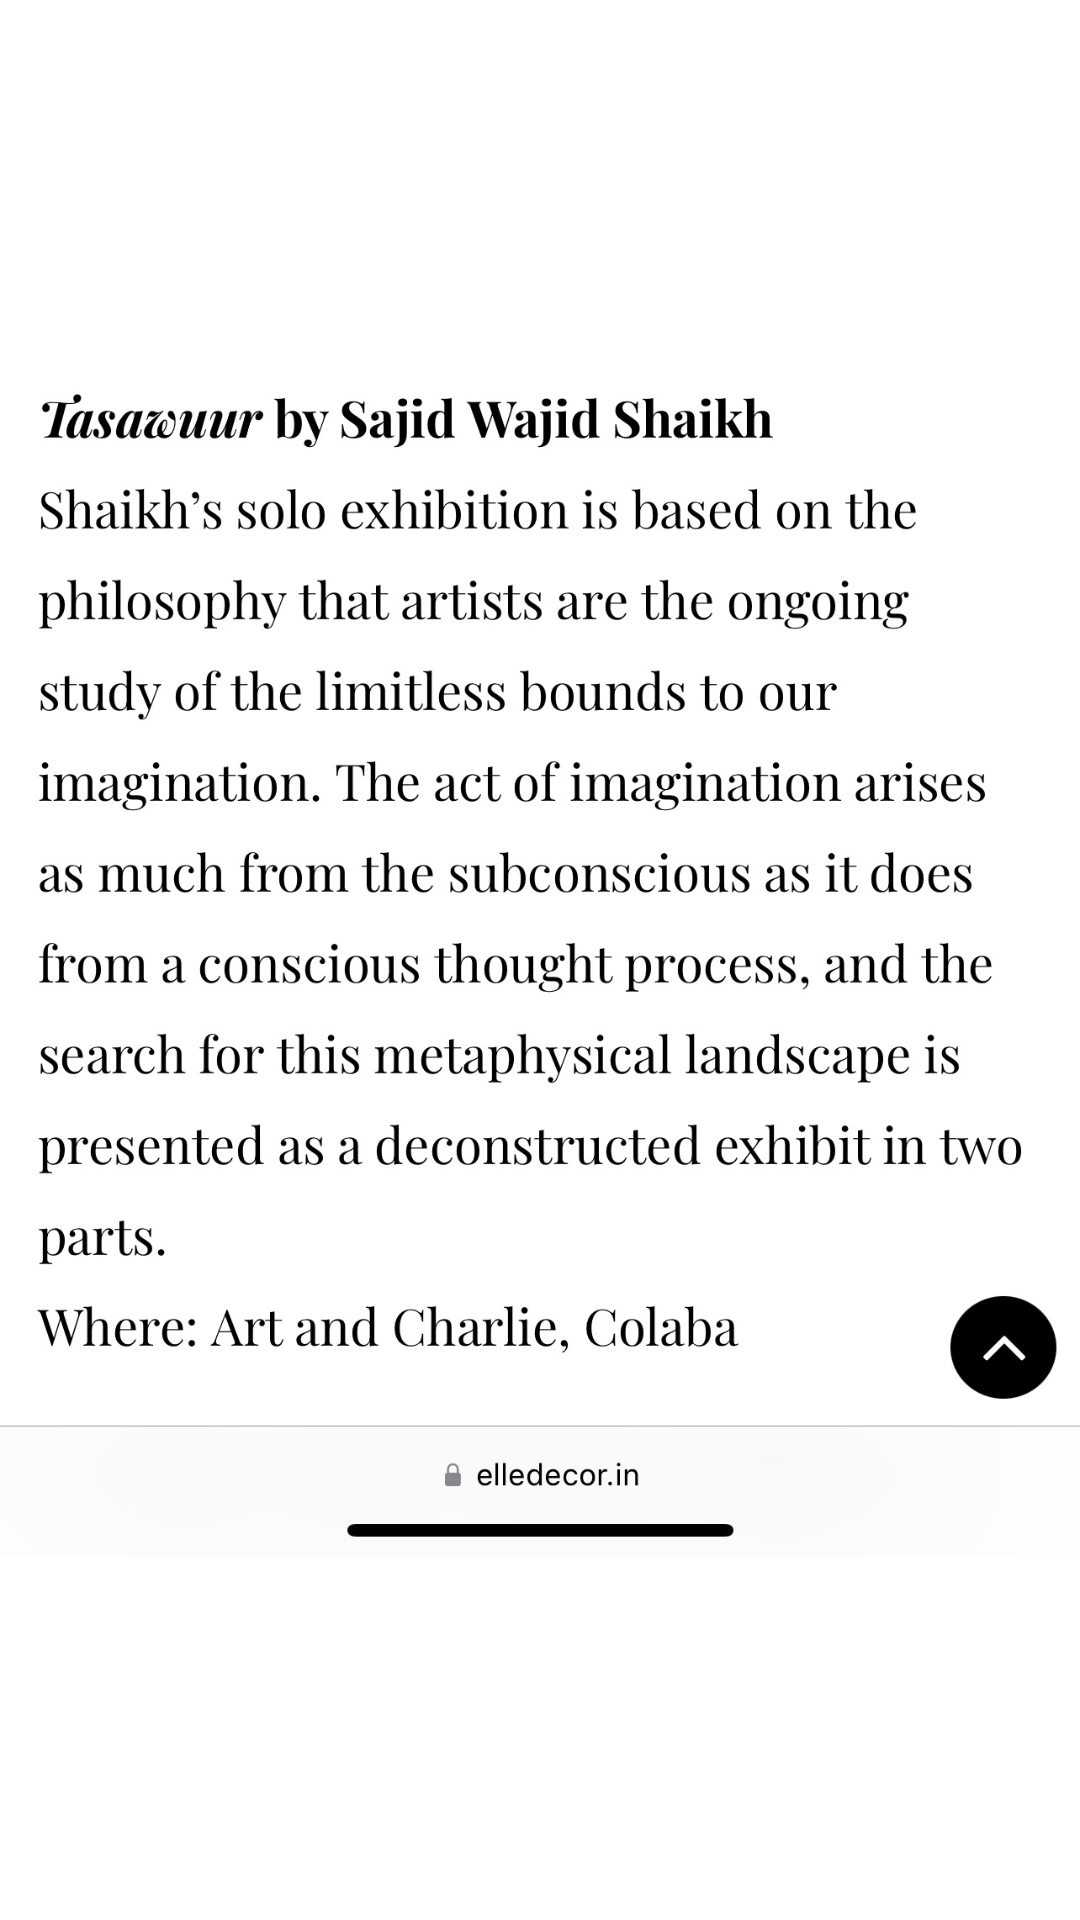 Art and Charlie - Mumbai Gallery weekend 2021